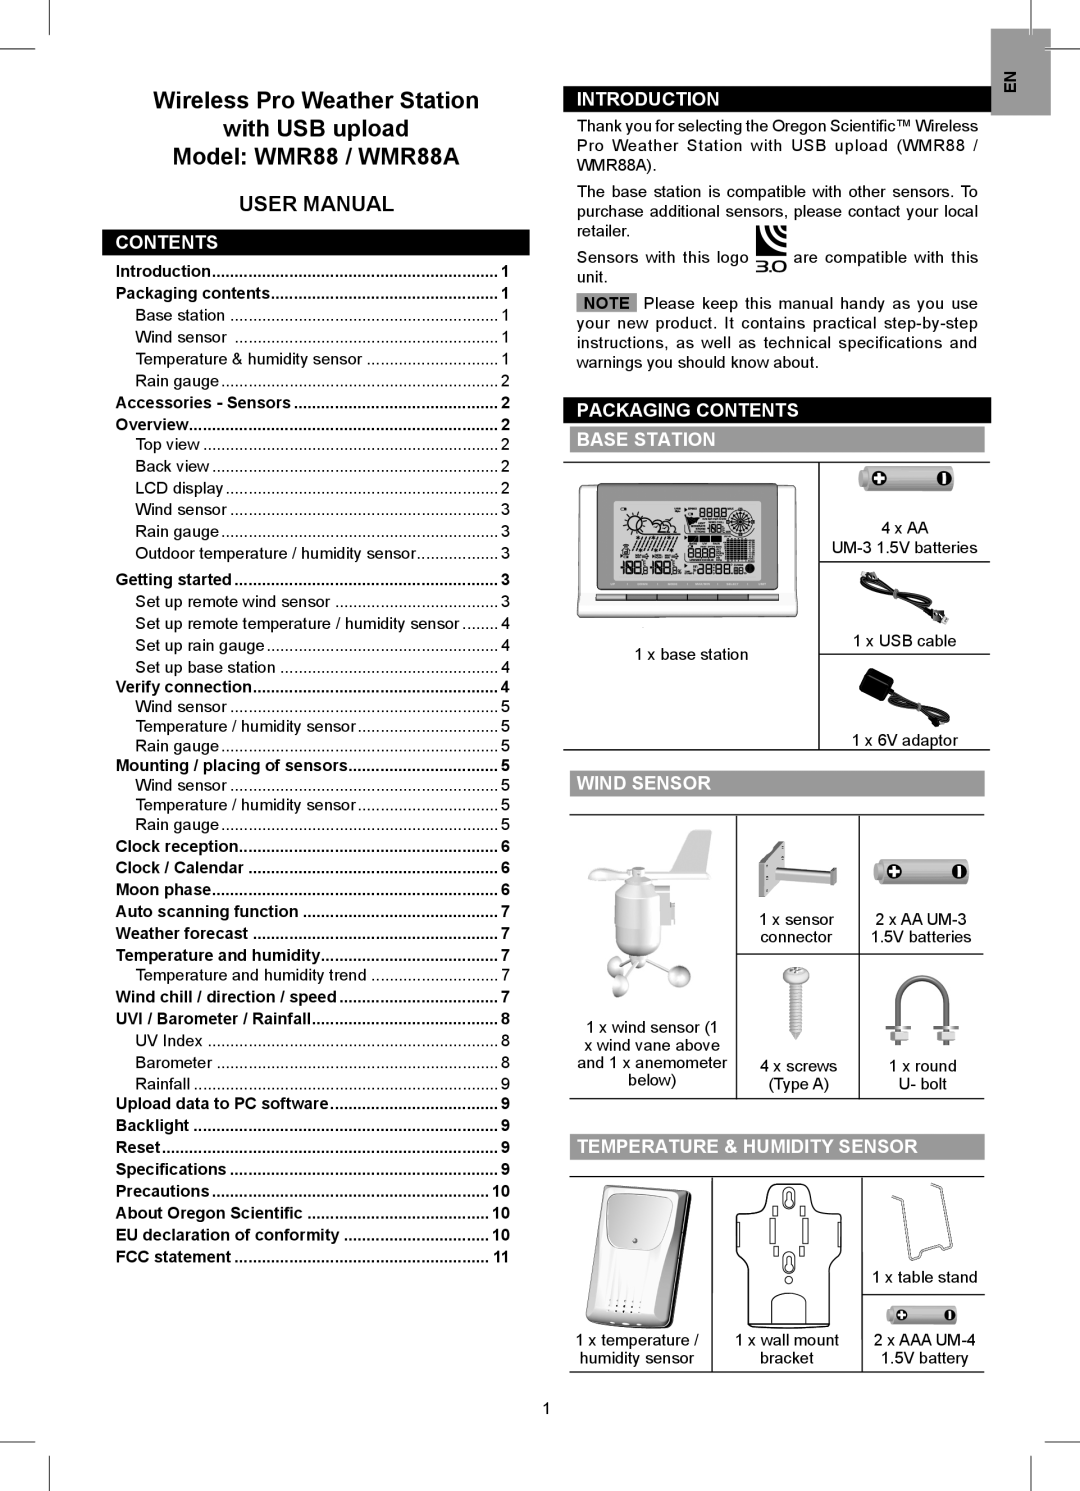 Oregon Scientific WMR88 user manual Introduction, Packaging Contents Base Station, Wind Sensor 